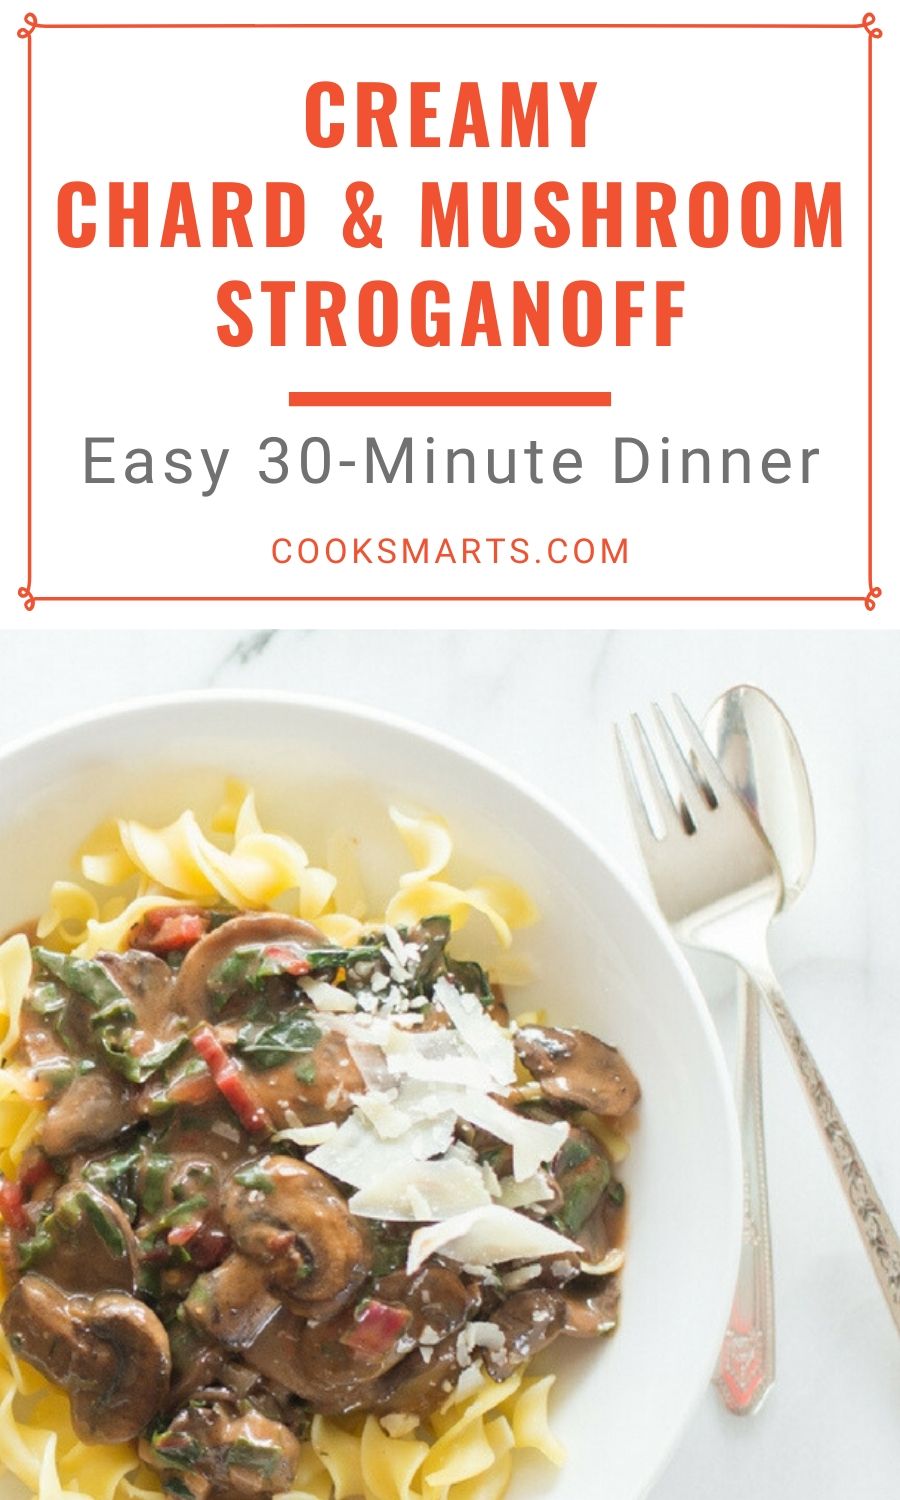 Easy Vegetarian Creamy Chard and Mushroom Stroganoff Recipe | Cook Smarts